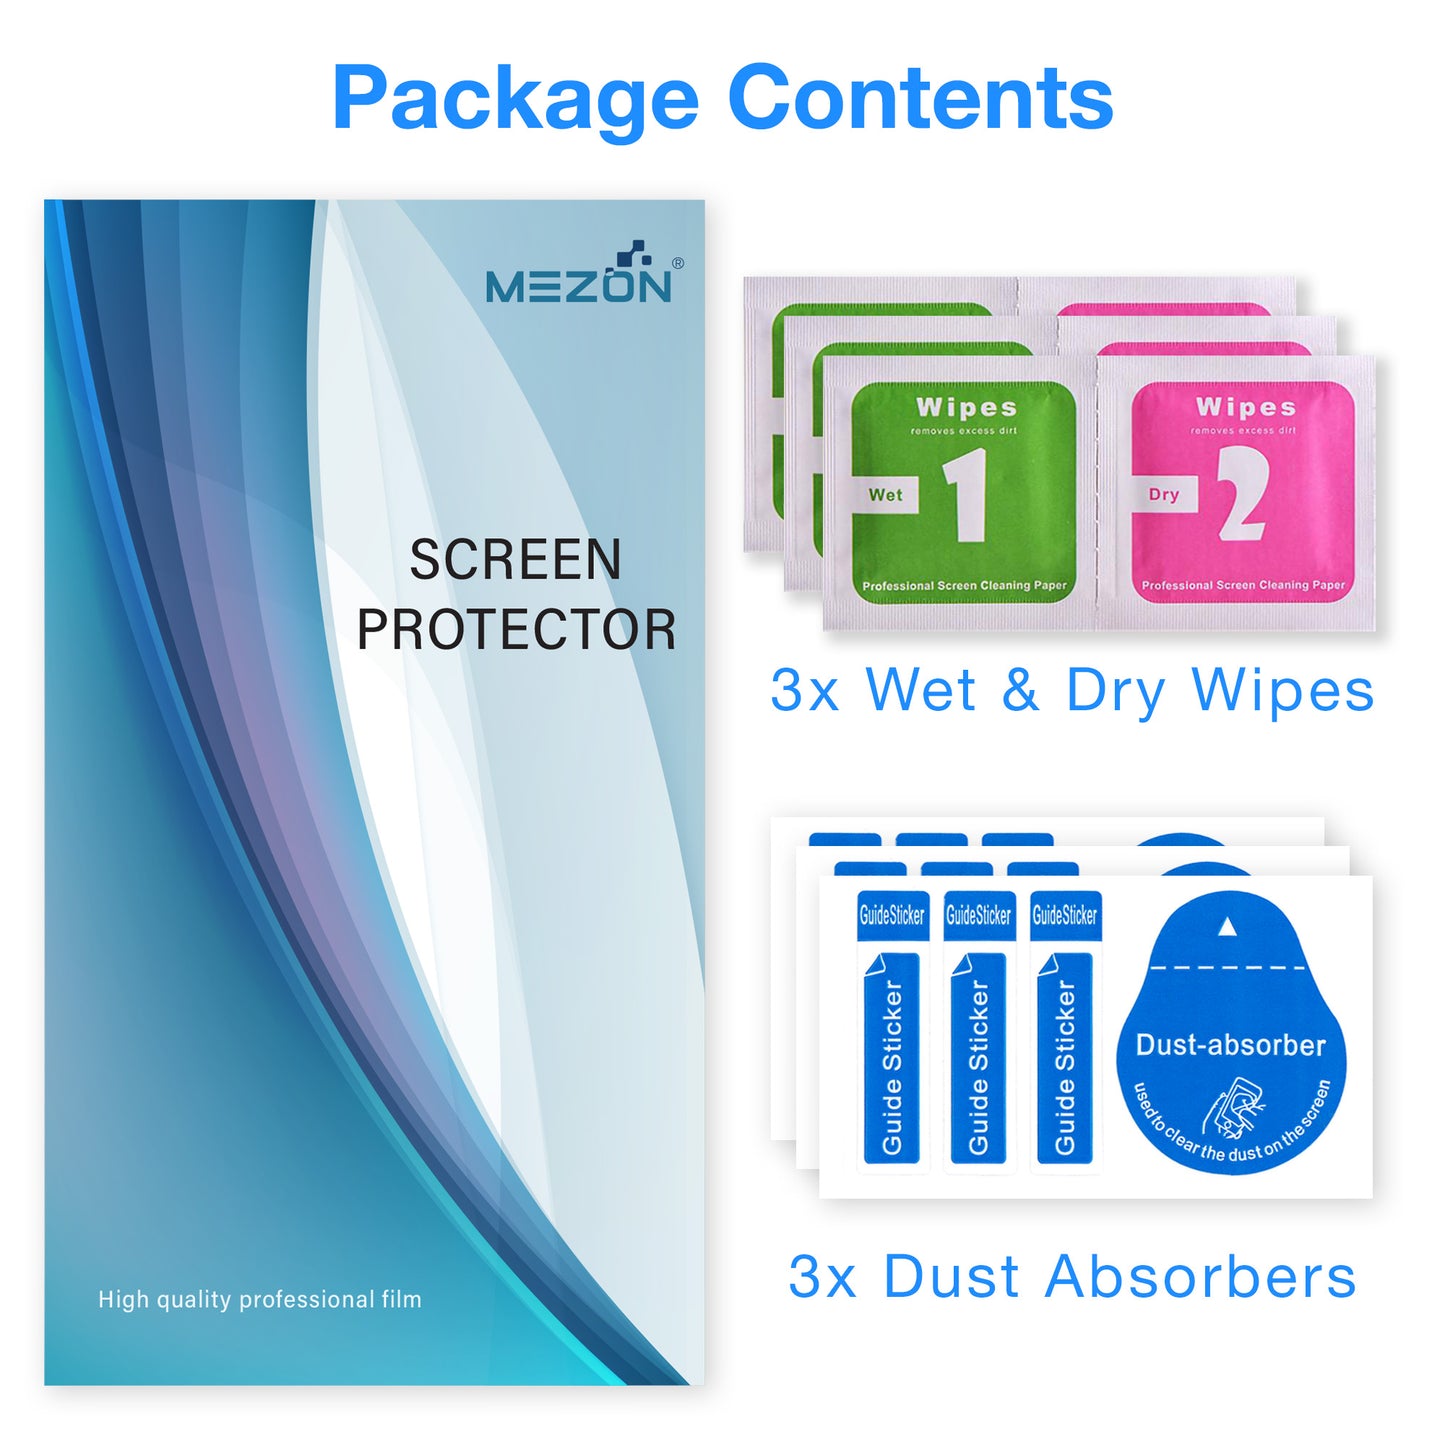 [3 Pack] MEZON Apple iPhone XS (5.8") Anti-Glare Matte Screen Protector Case Friendly Film (iPhone XS, Matte)